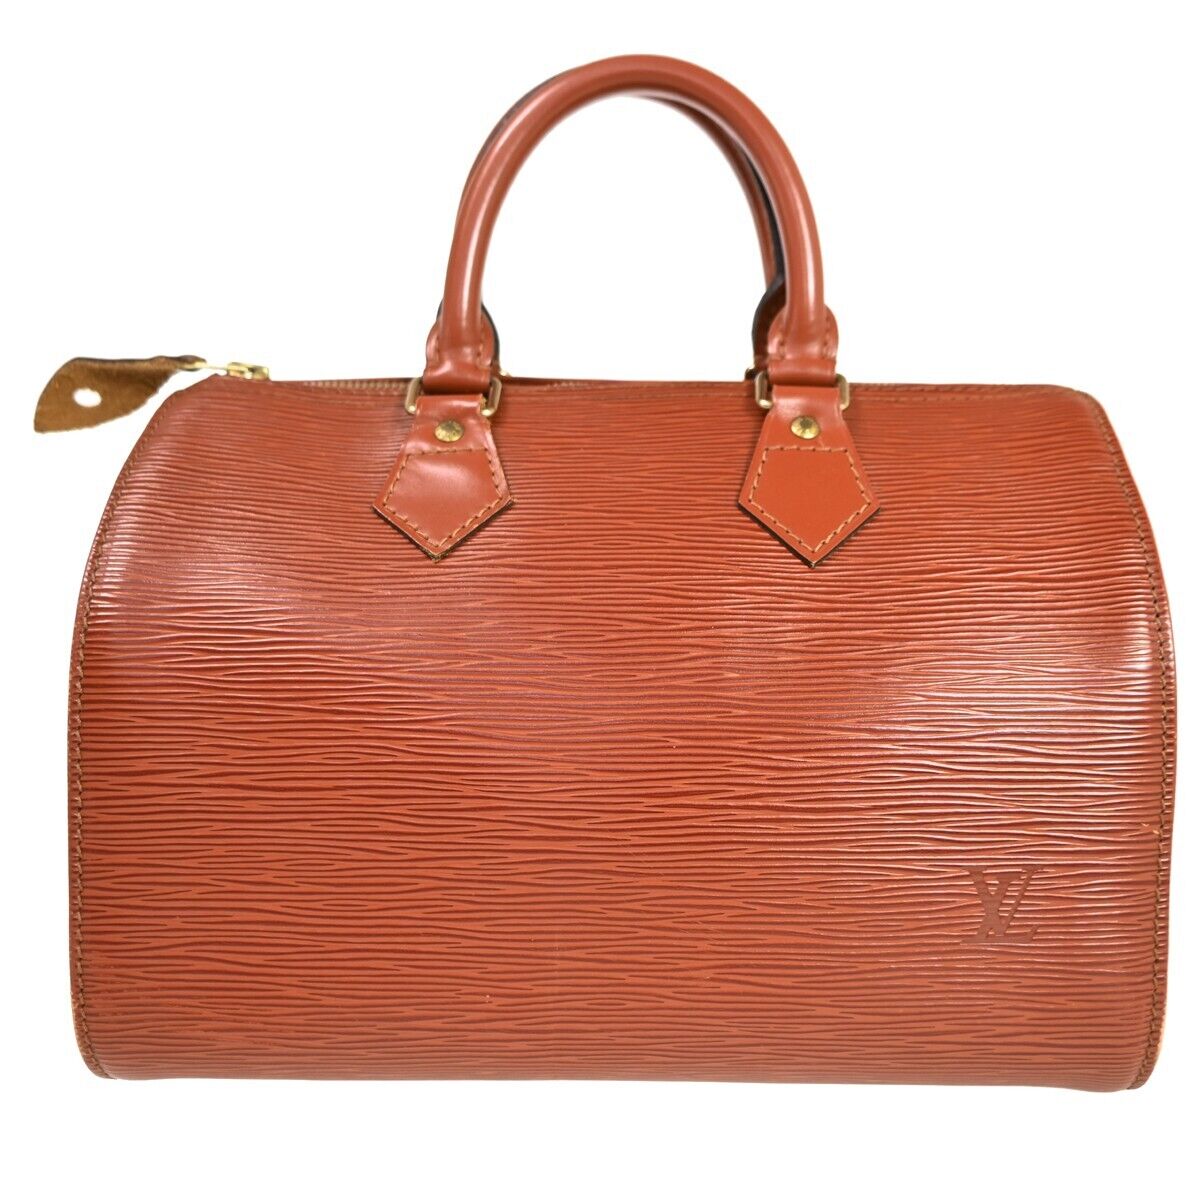 Louis Vuitton Speedy 25 Brown Leather Handbag (Pre-Owned)